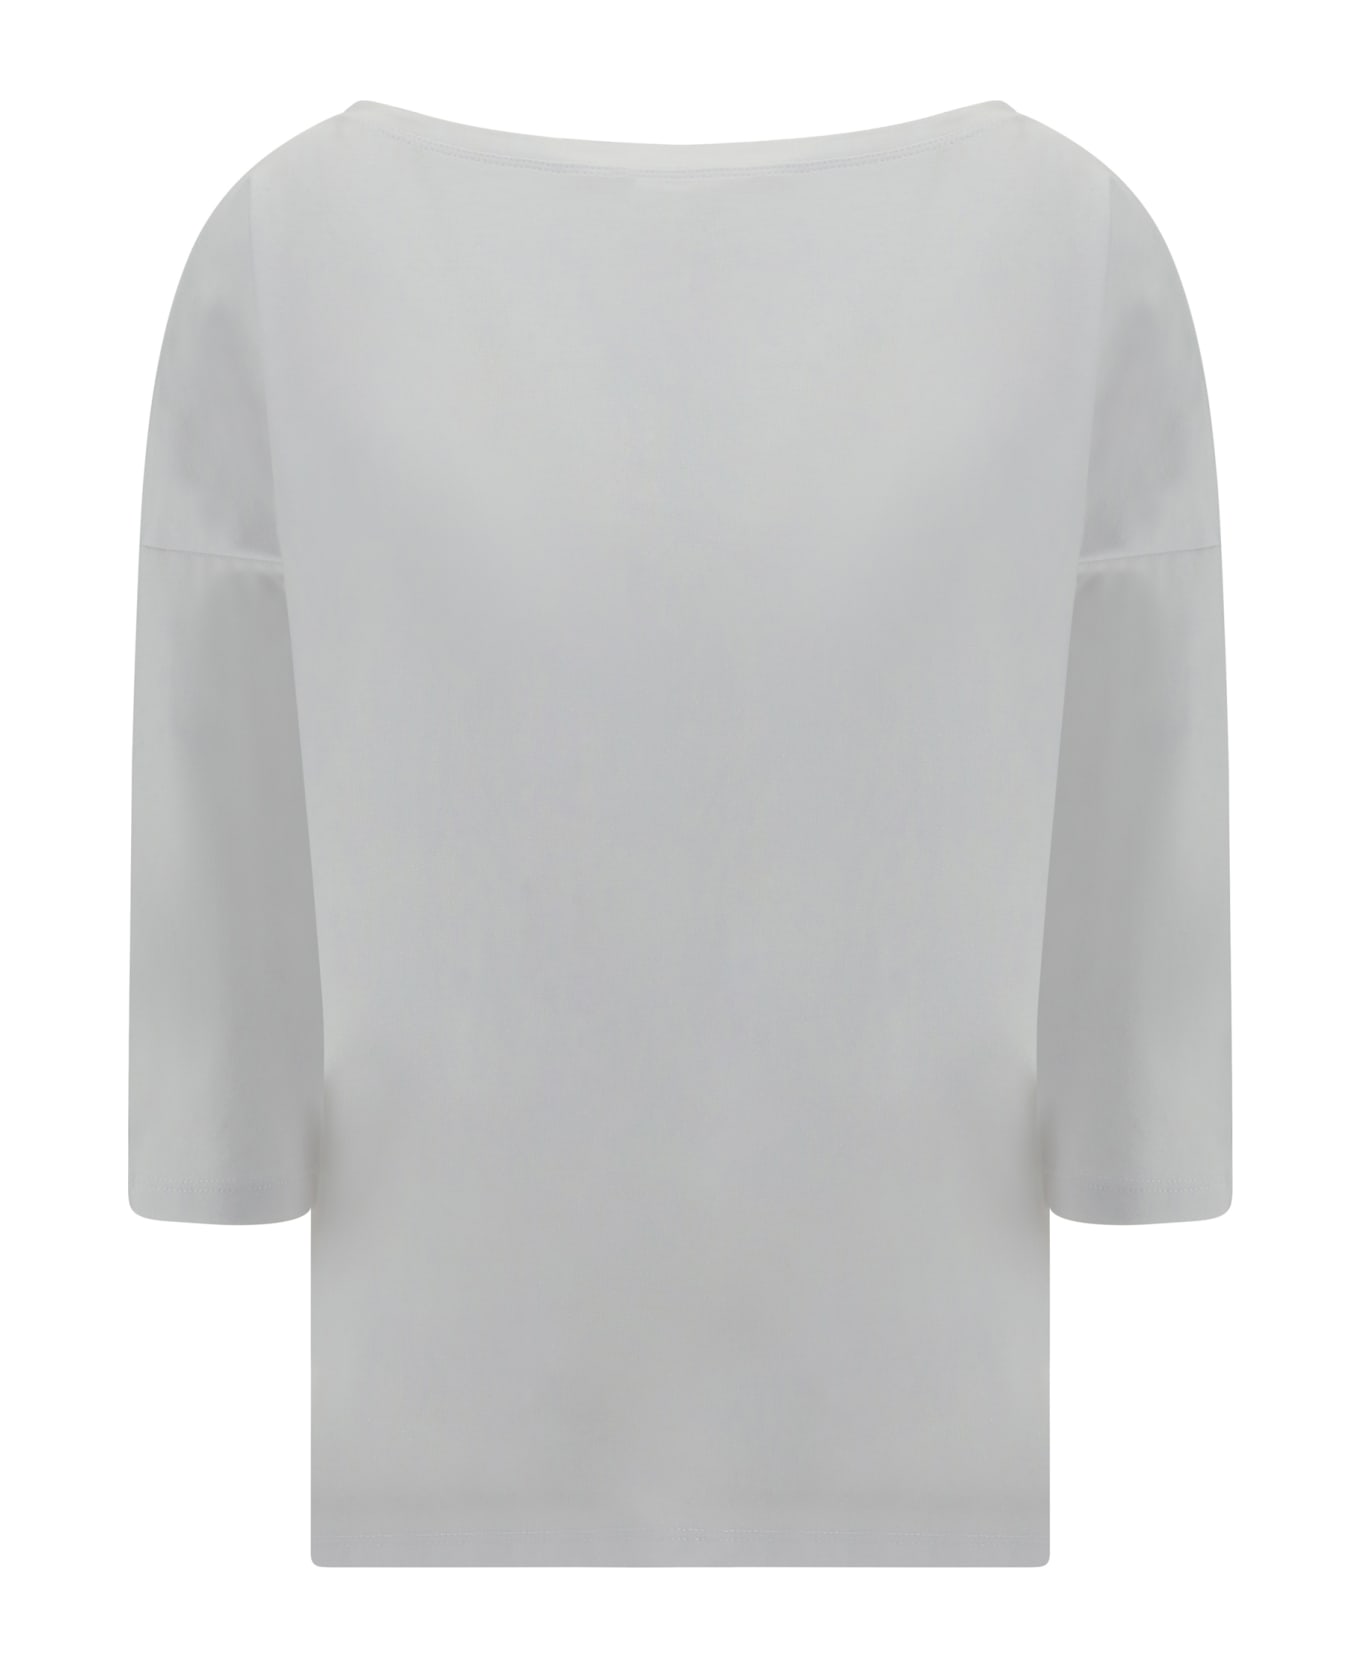 Wild Cashmere T-shirt - Off-white 001